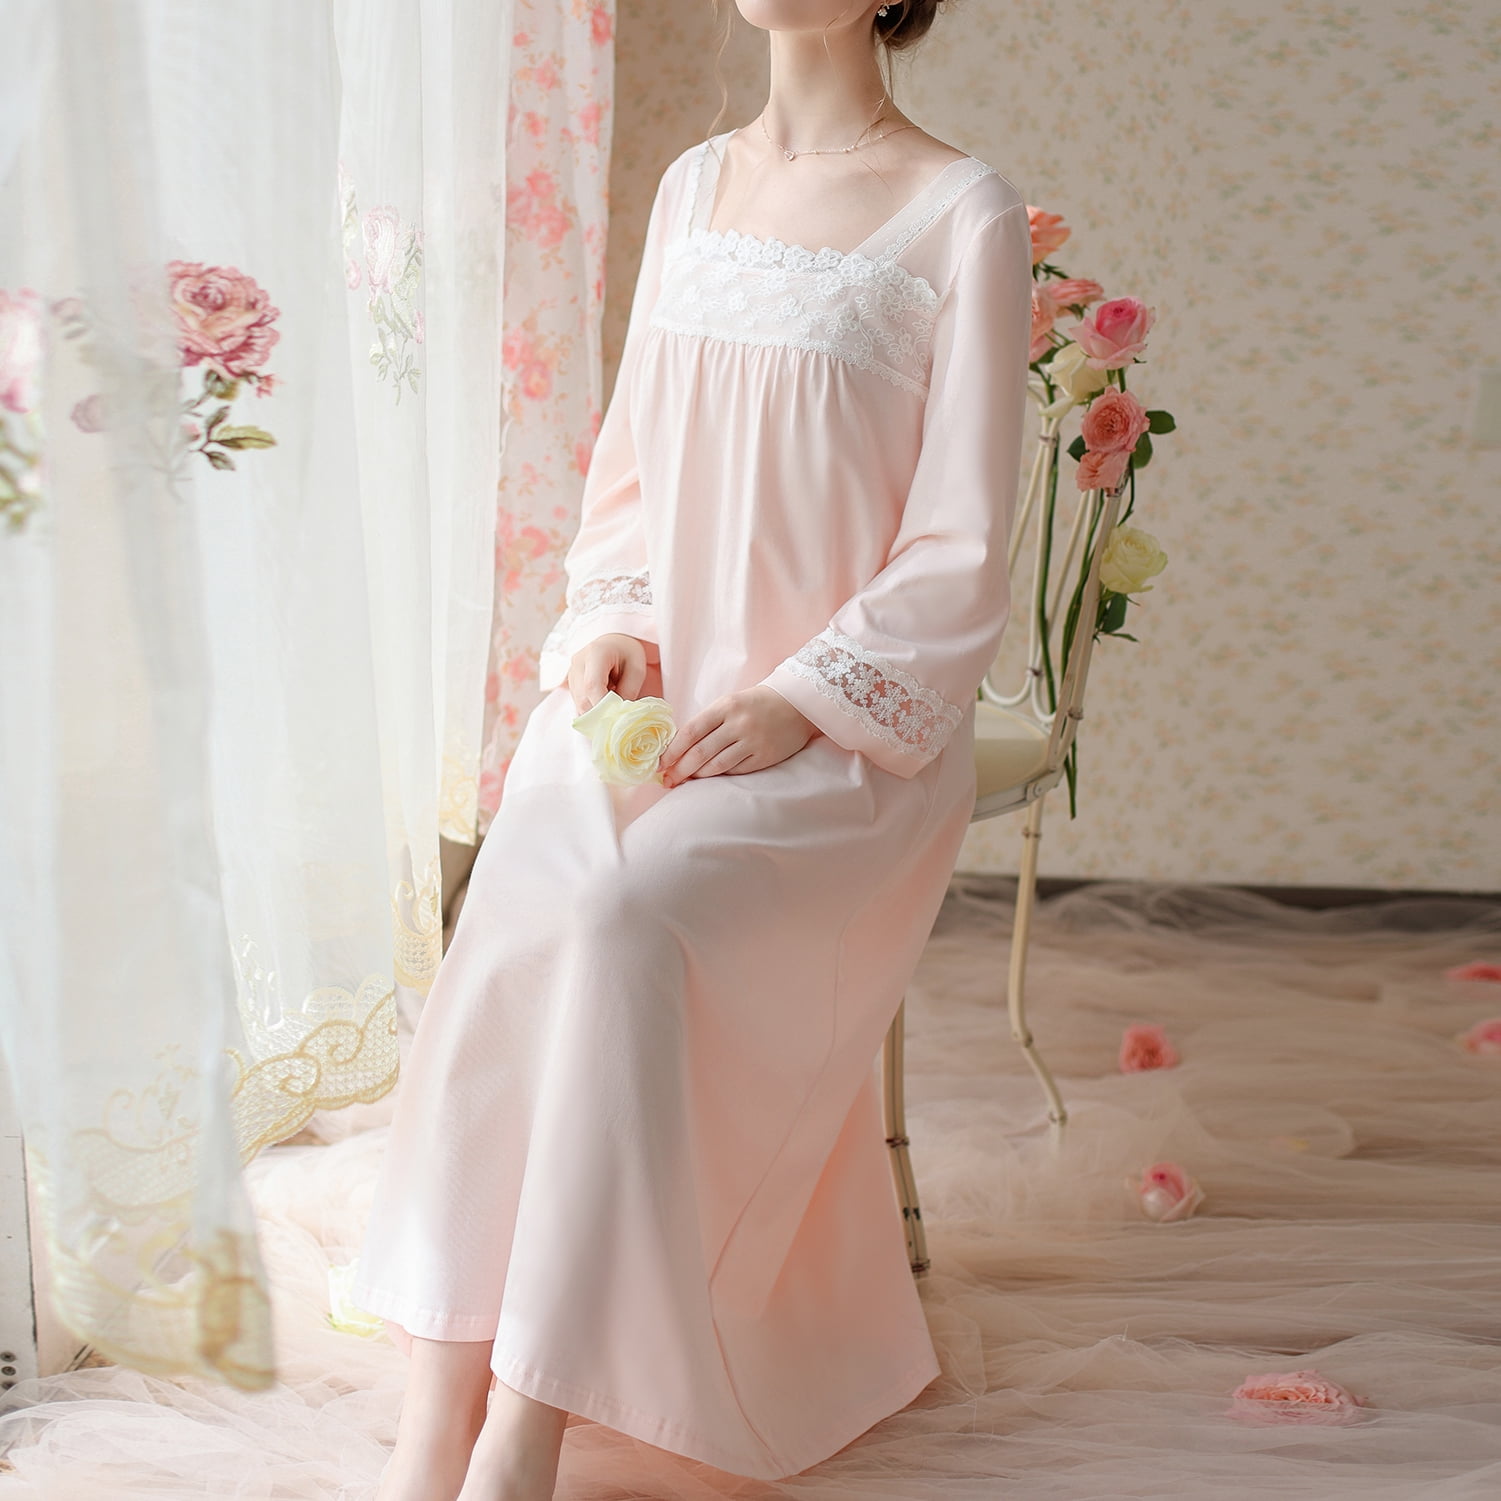 Homgro Women's Cotton Sleep Shirt Cute Lace Victorian Nightgown